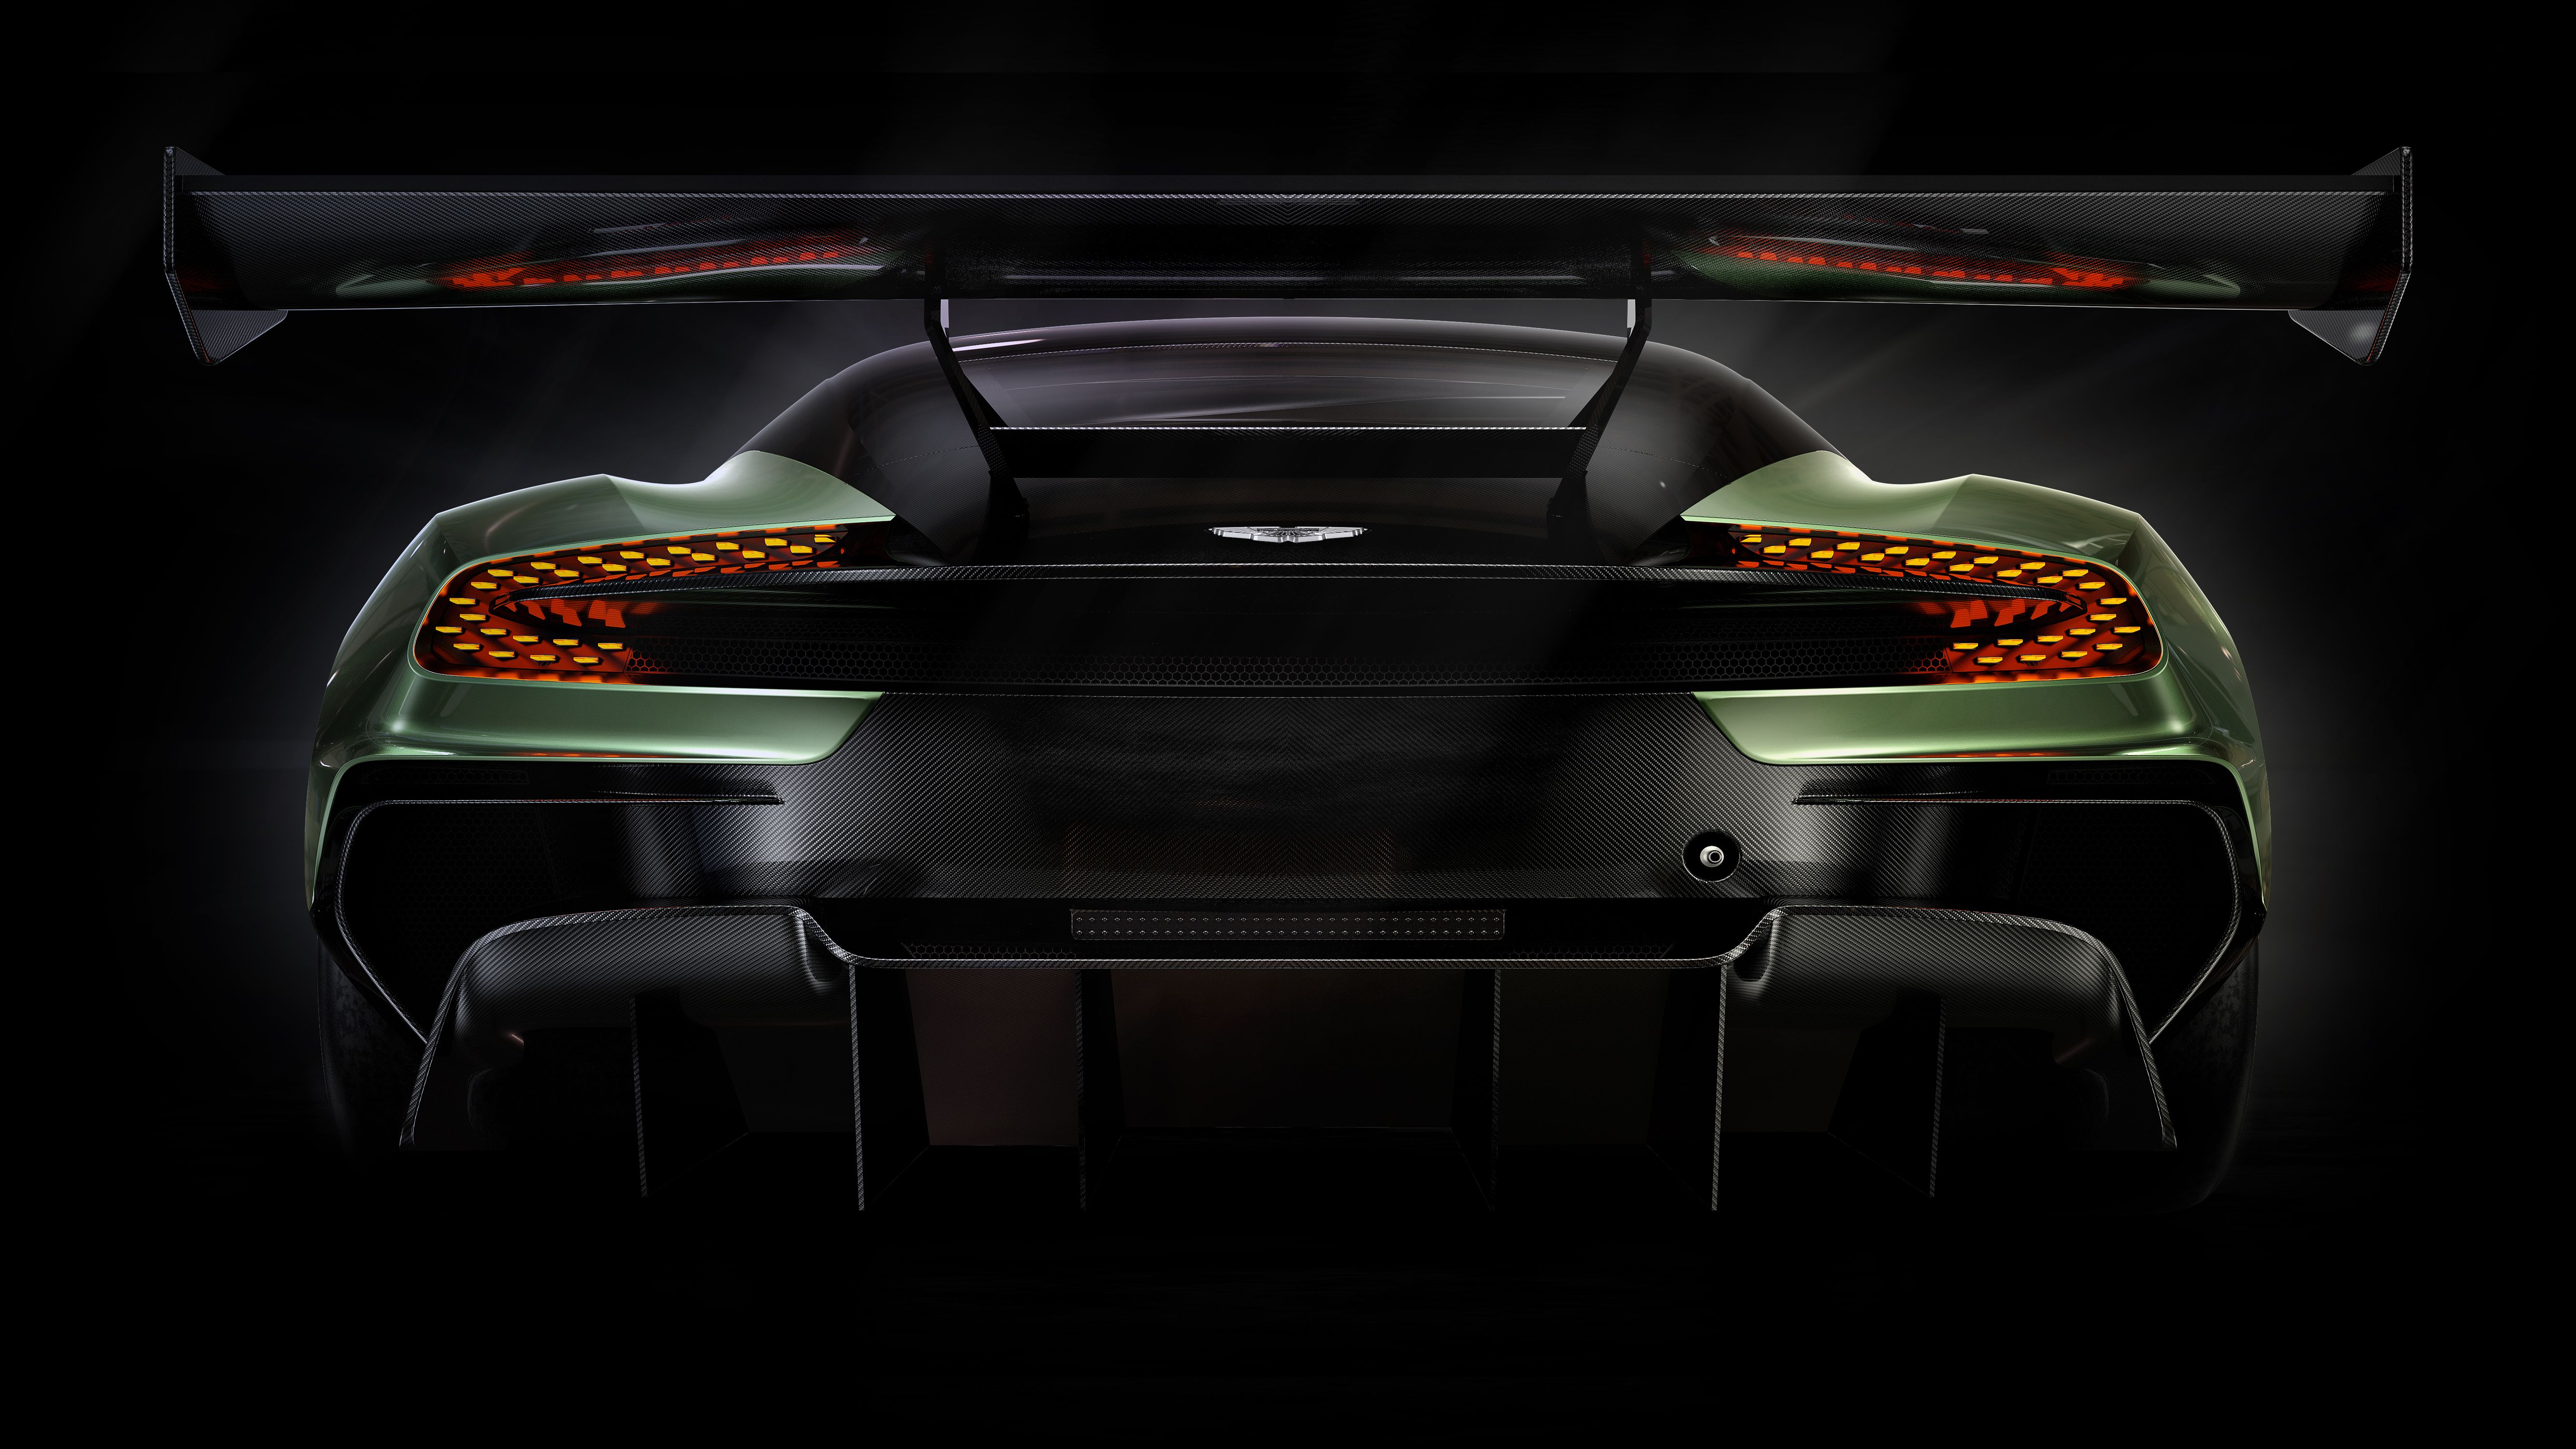 Aston Martin Vulcan Wallpaper Image Photo Picture Background